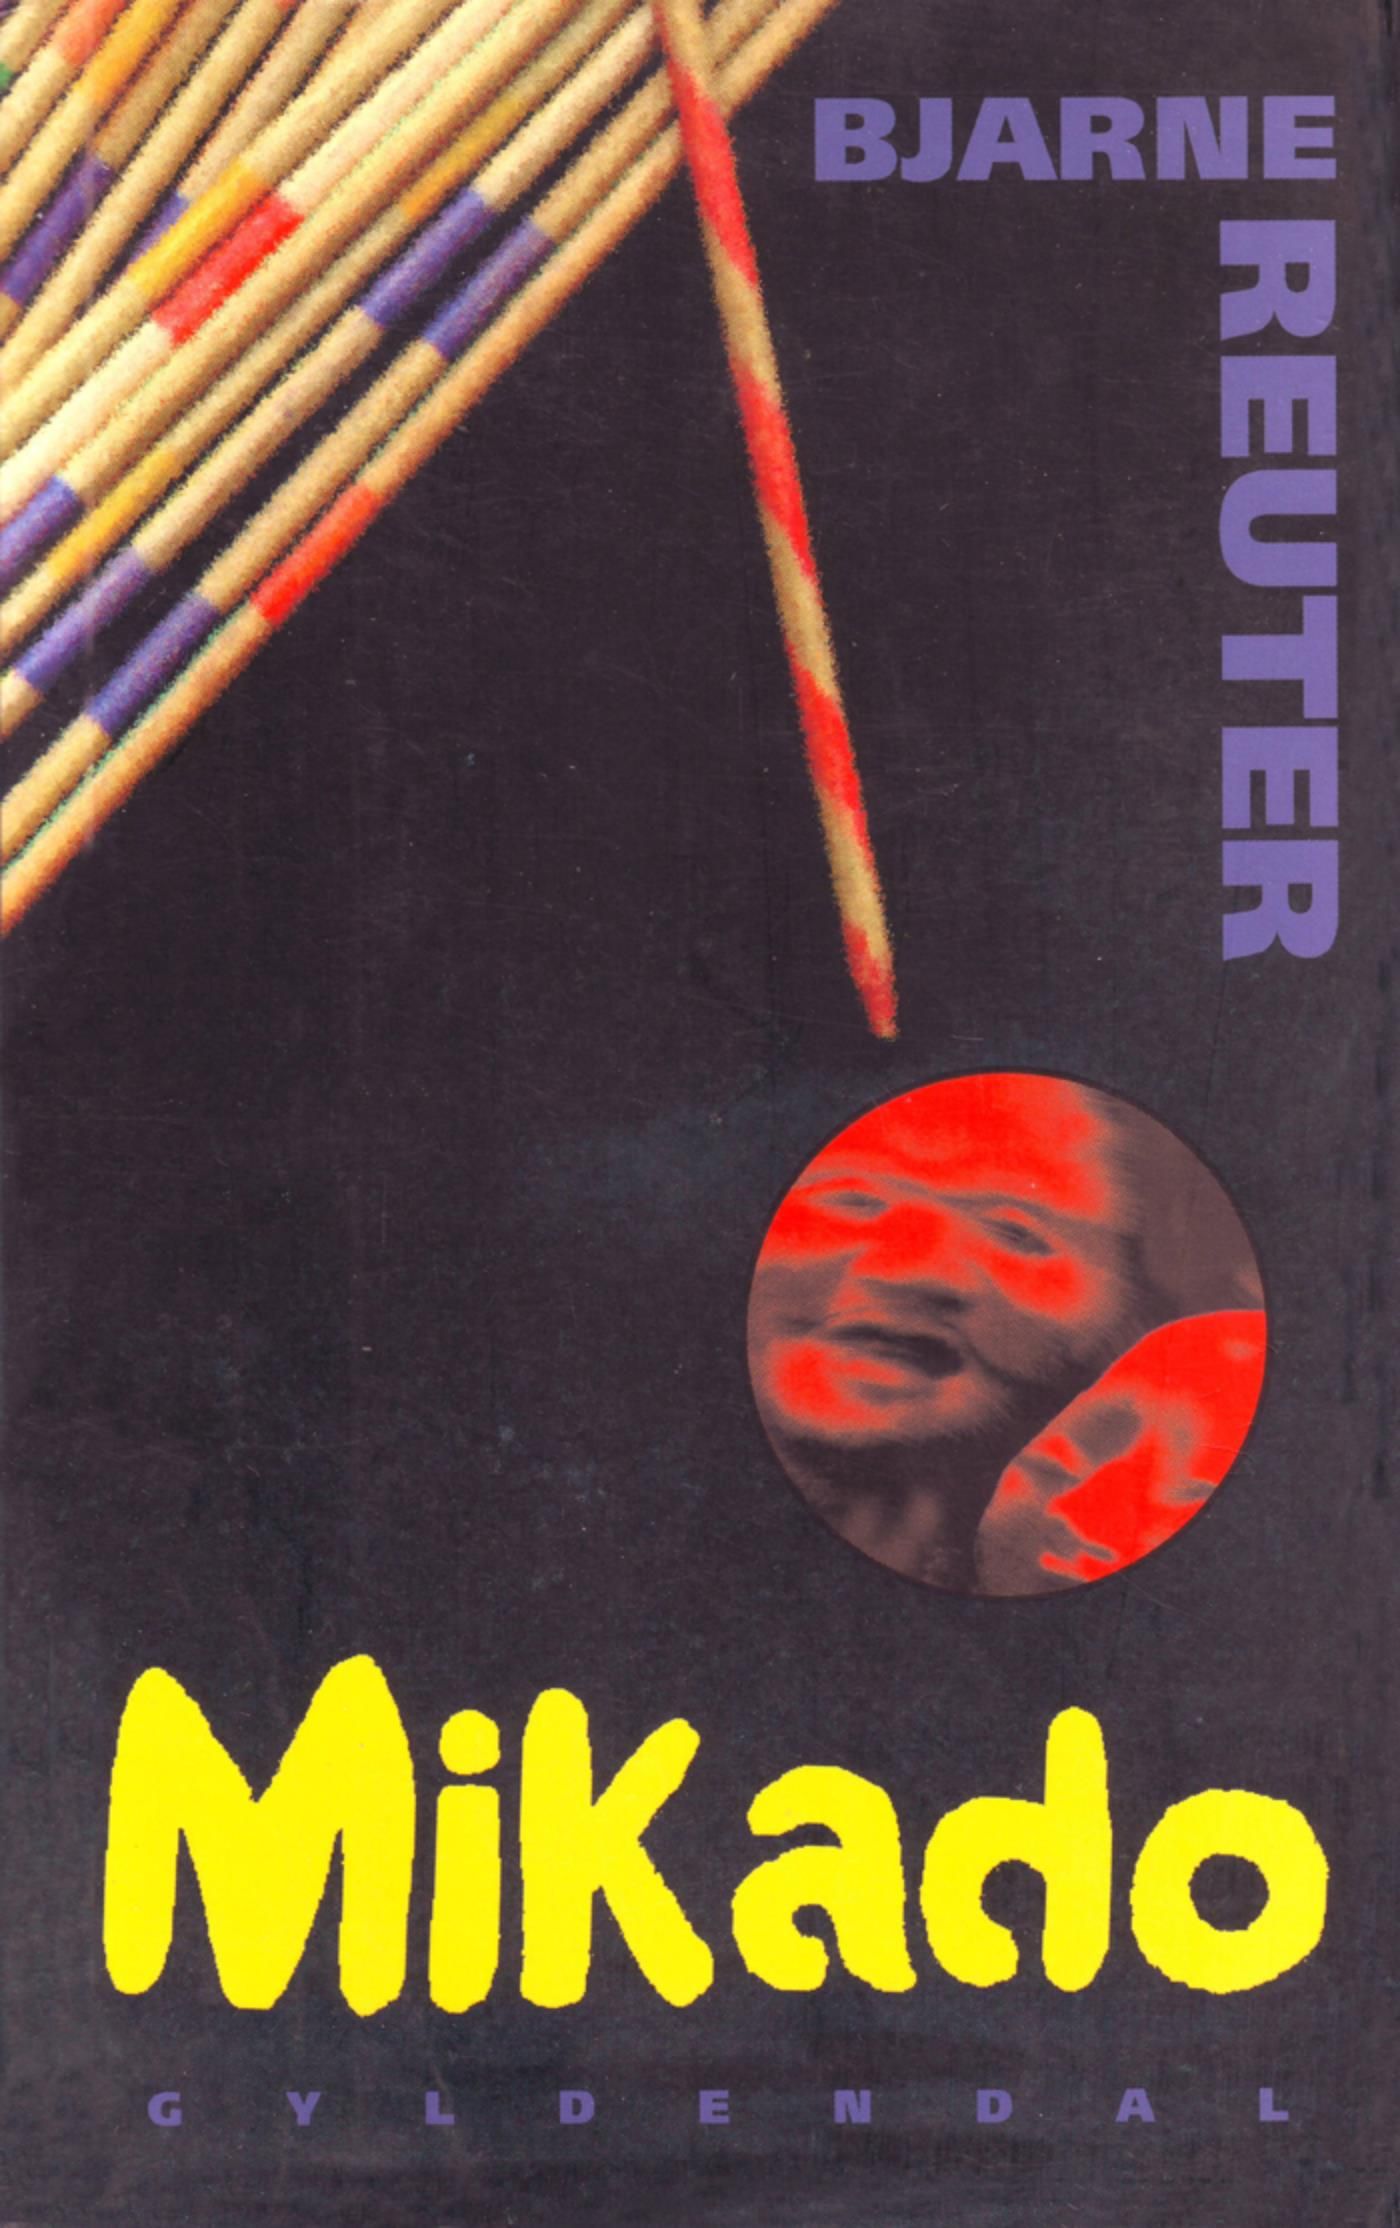 Mikado, eBook by Bjarne Reuter